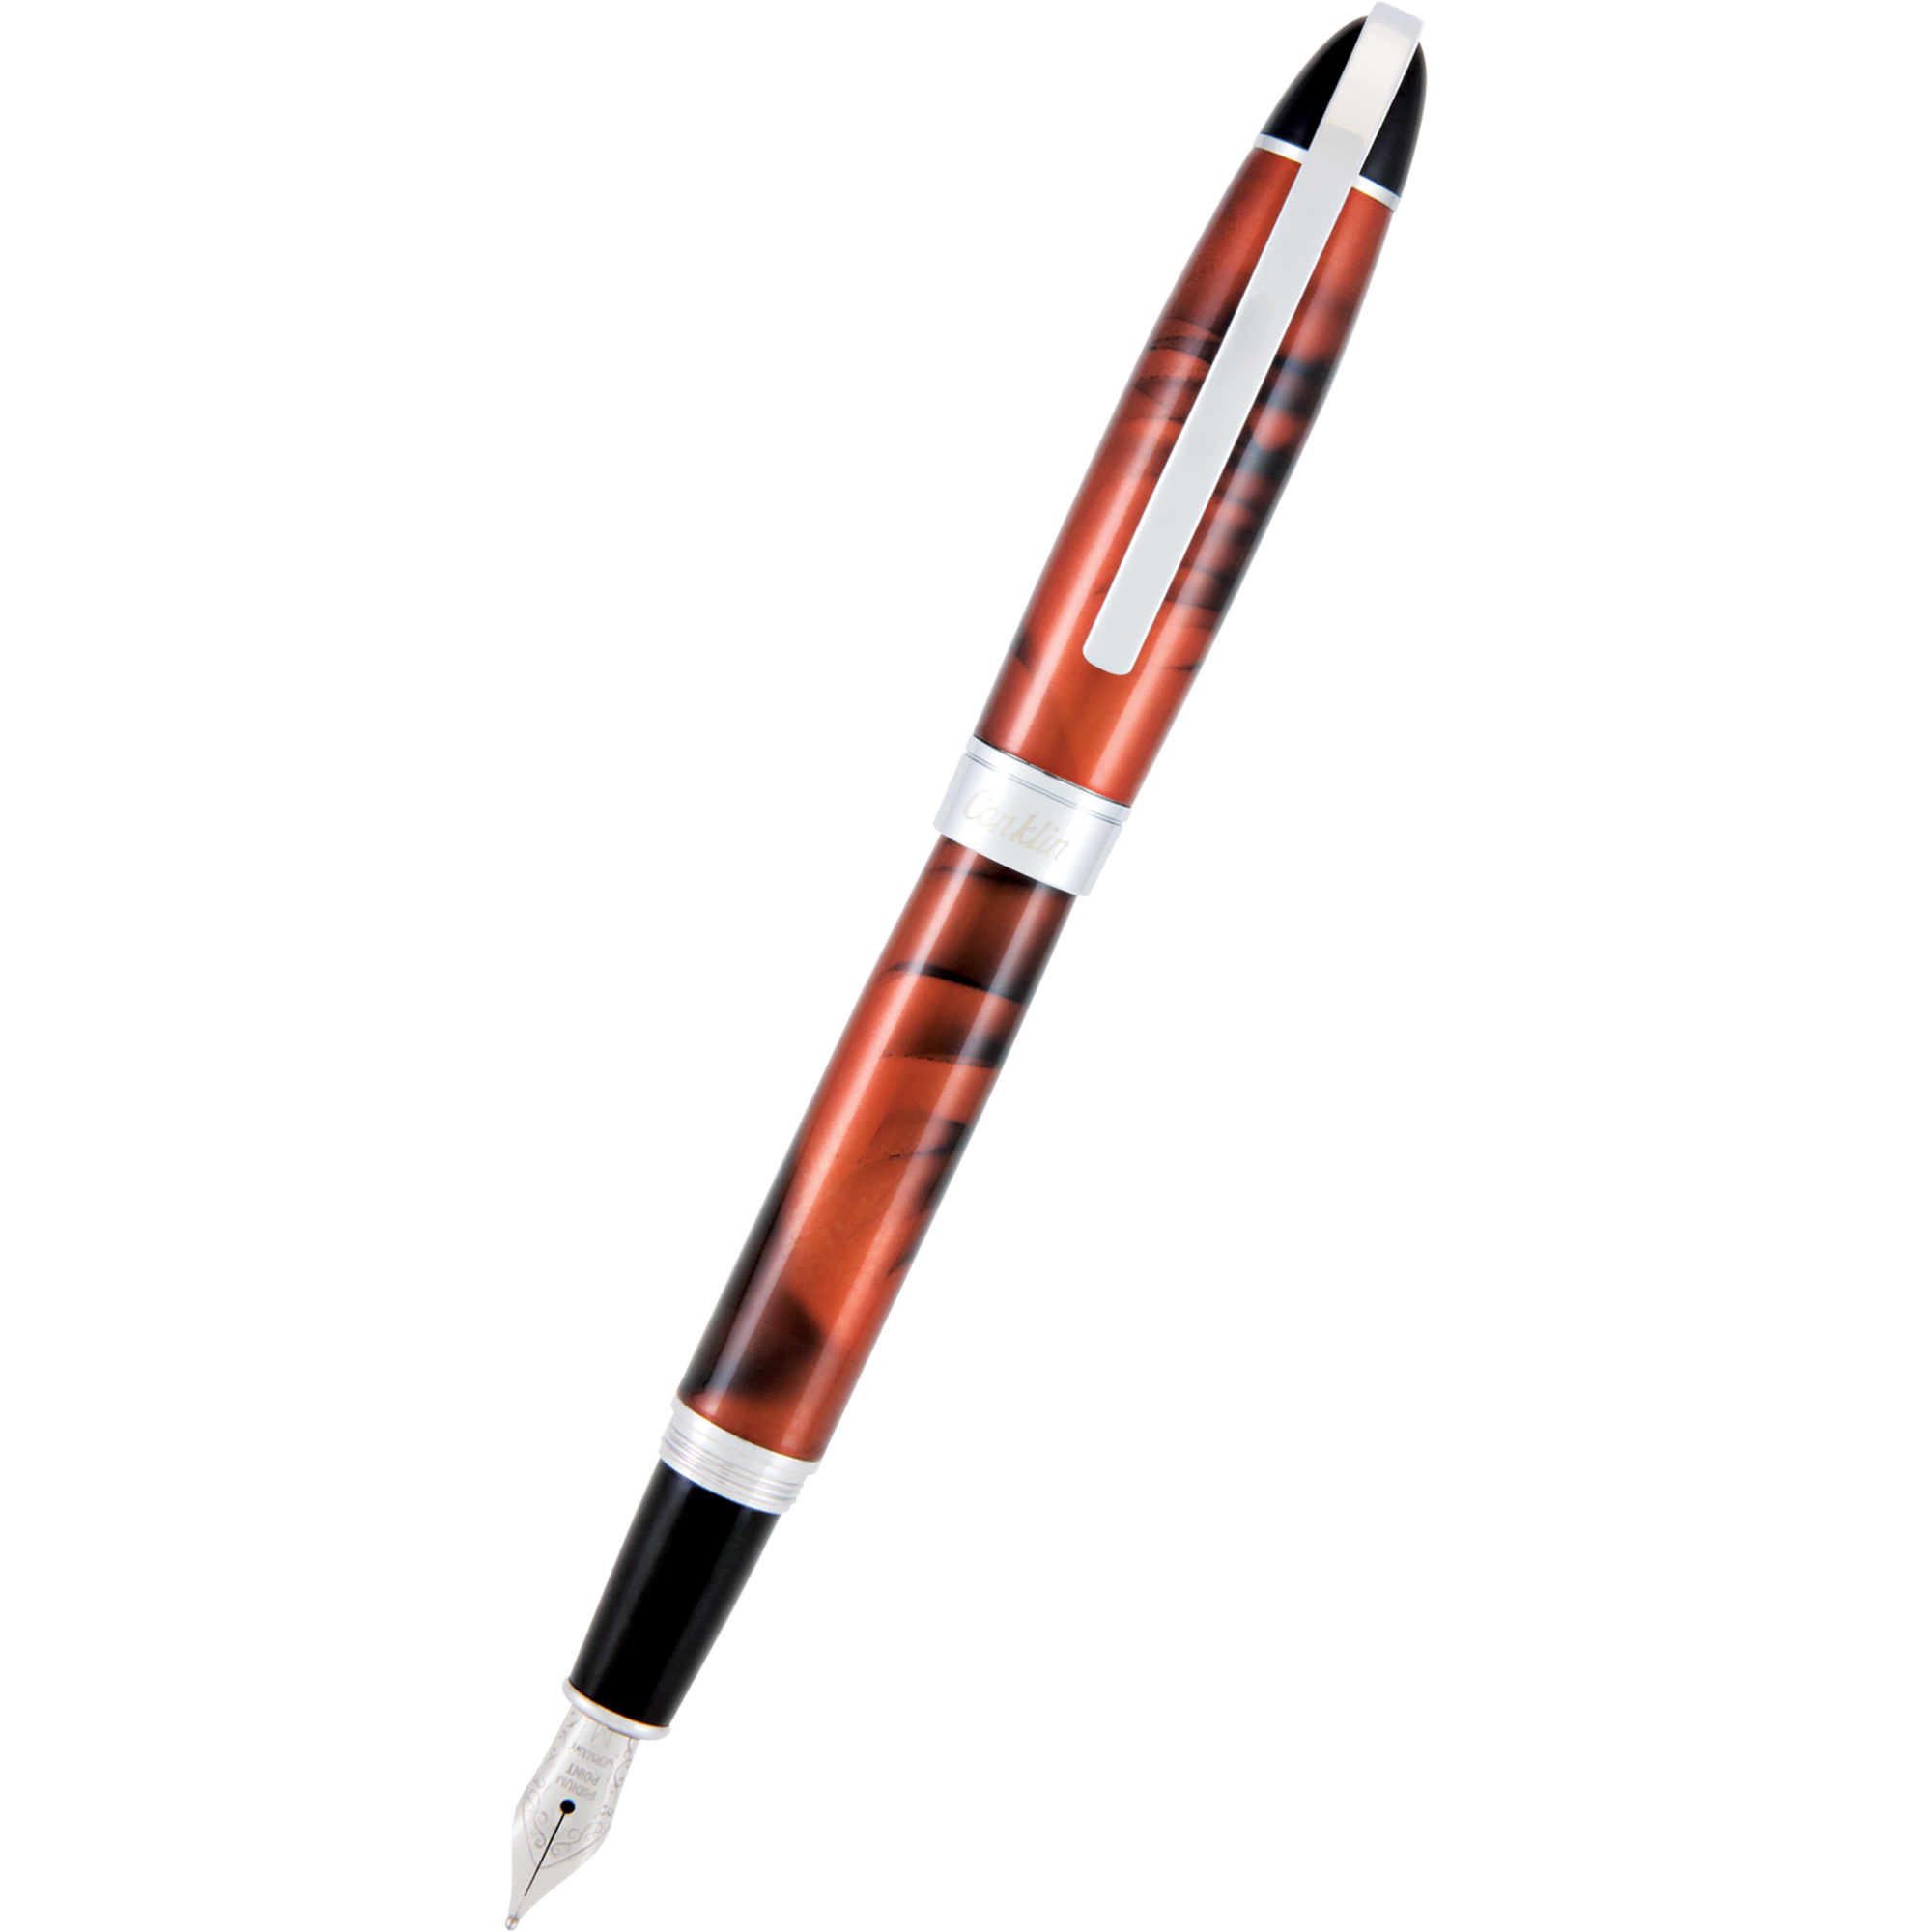 Conklin Victory Fountain Pen - Cinnamon Brown-Pen Boutique Ltd